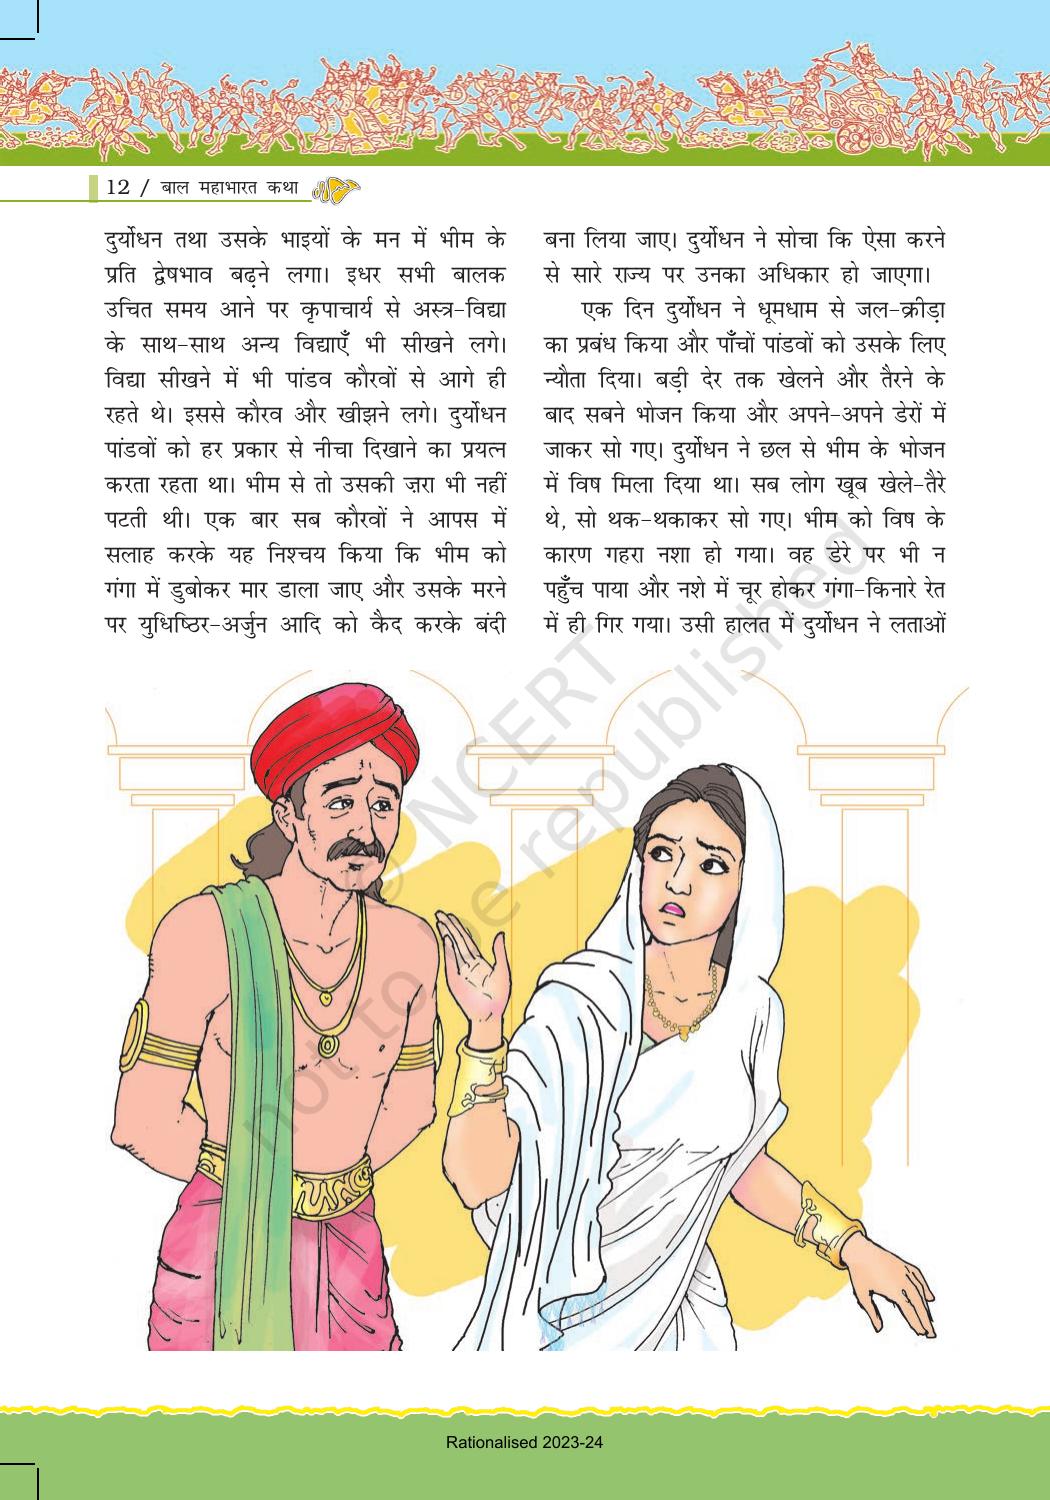 NCERT Book for Class 7 Hindi: Chapter 1-बाल महाभारत कथा - Page 12